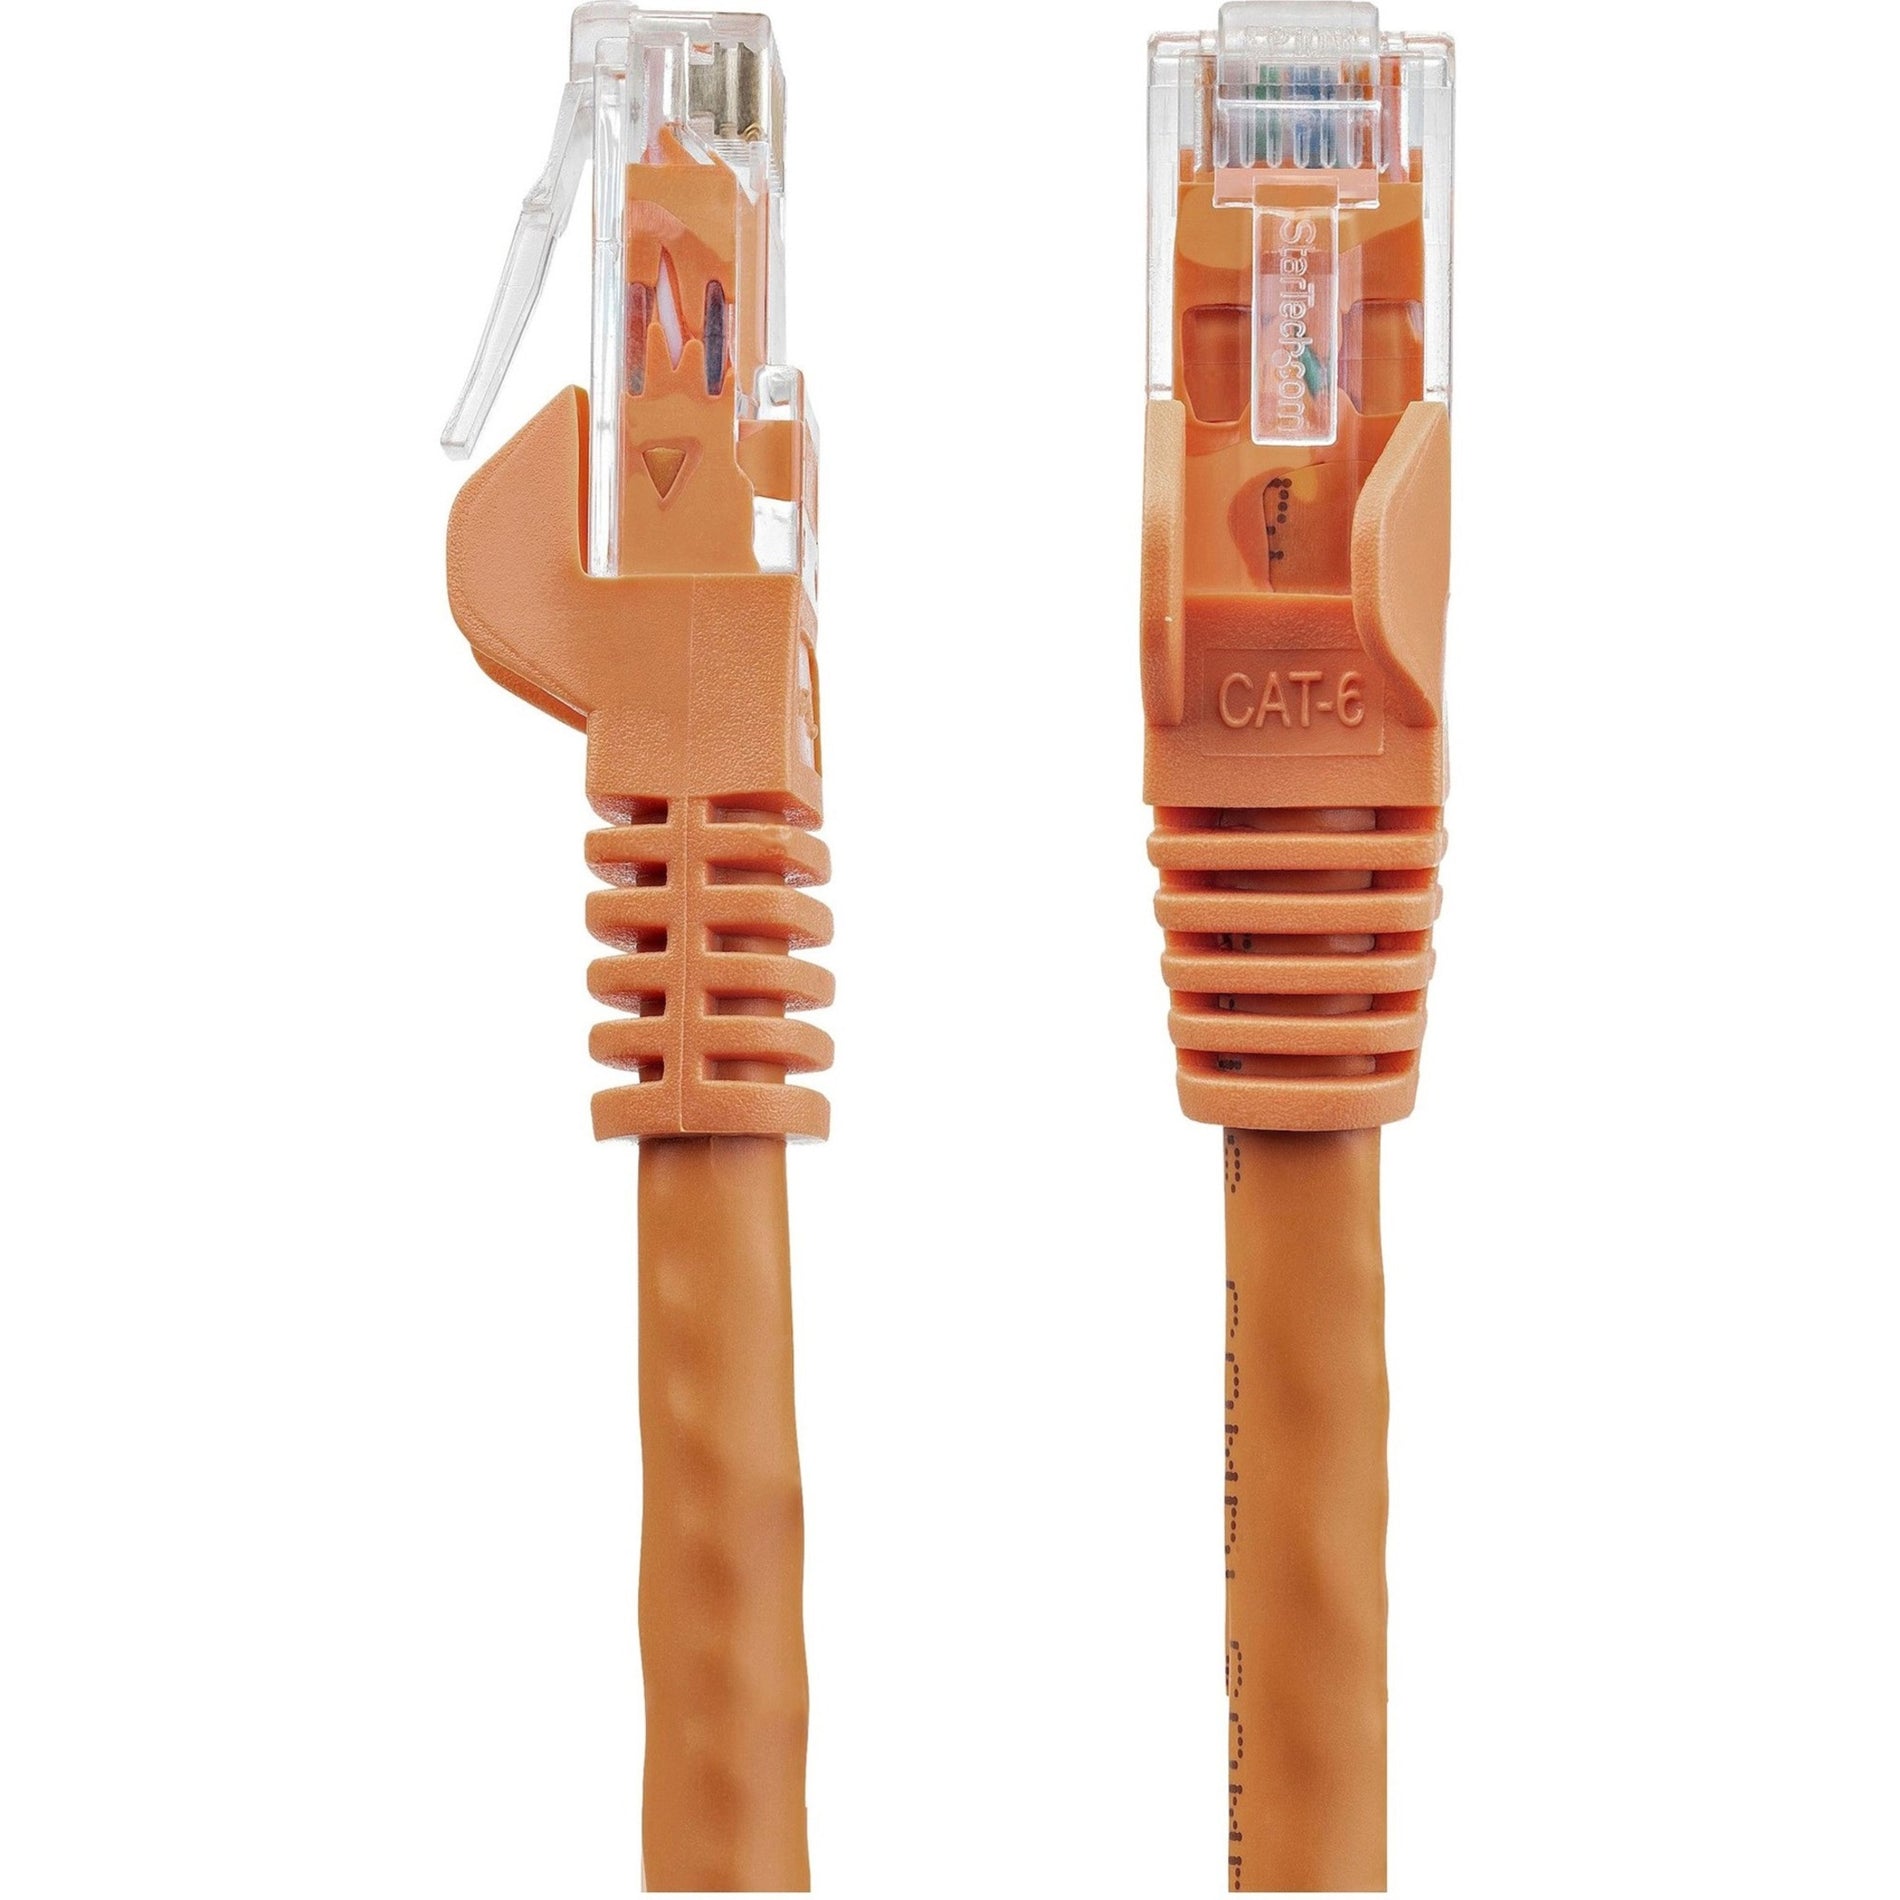 StarTech.com N6PATCH9OR Cat6 Patch Cable, 9 ft Orange Ethernet Cable, Snagless RJ45 Connectors